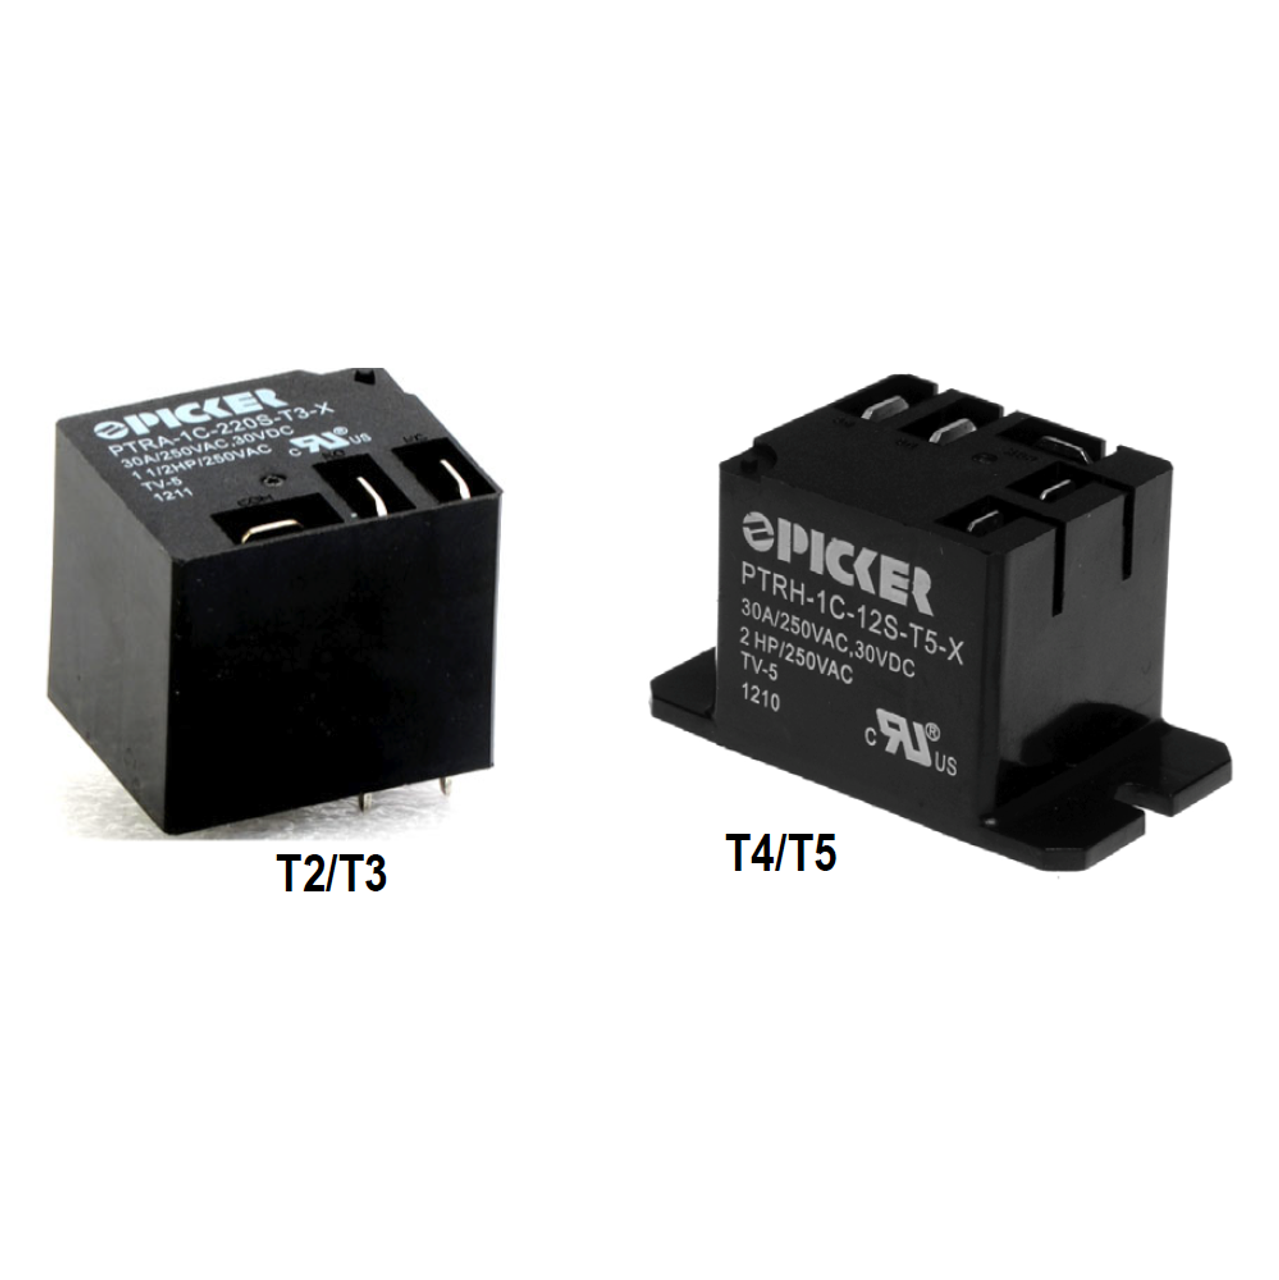 Picker PTRH-1C-110SF-T3-X67A0.6 Power Relays